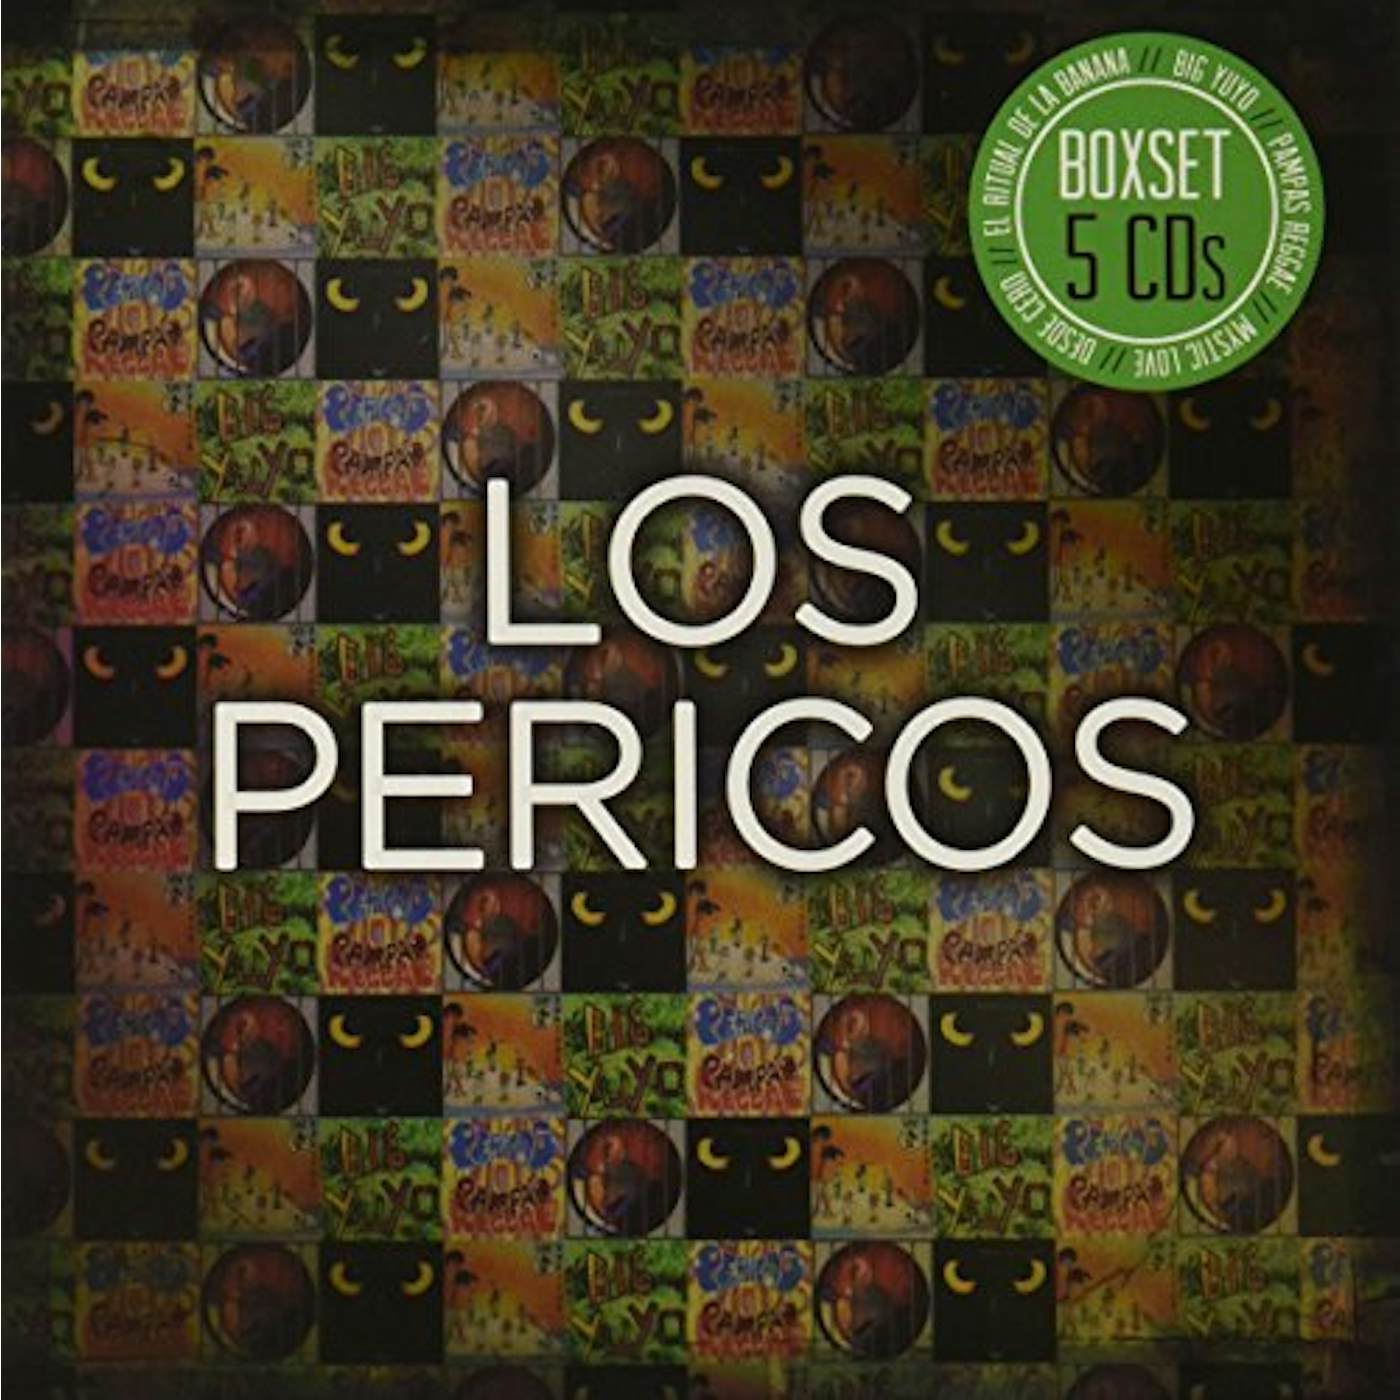 Los Pericos BOXSET 5 CDS CD